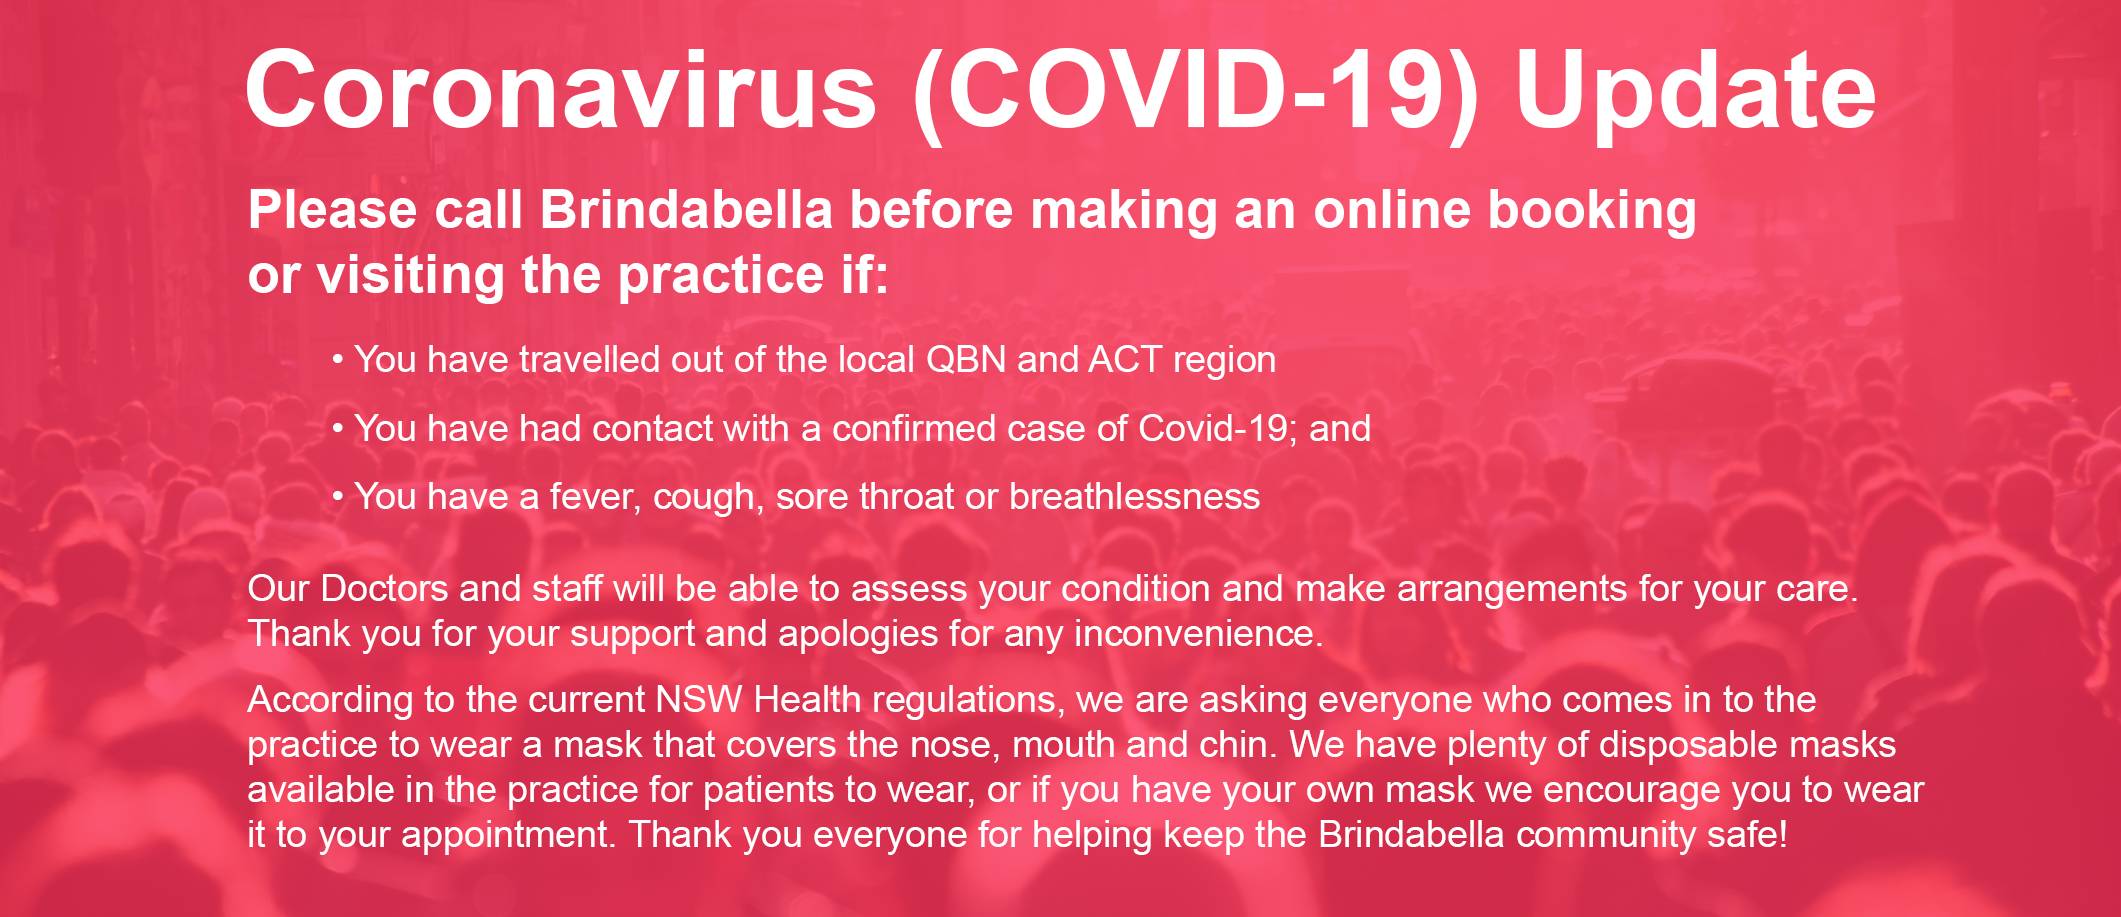 100220-Coronavirus-Banner-BrindabellaUpdate_August.png